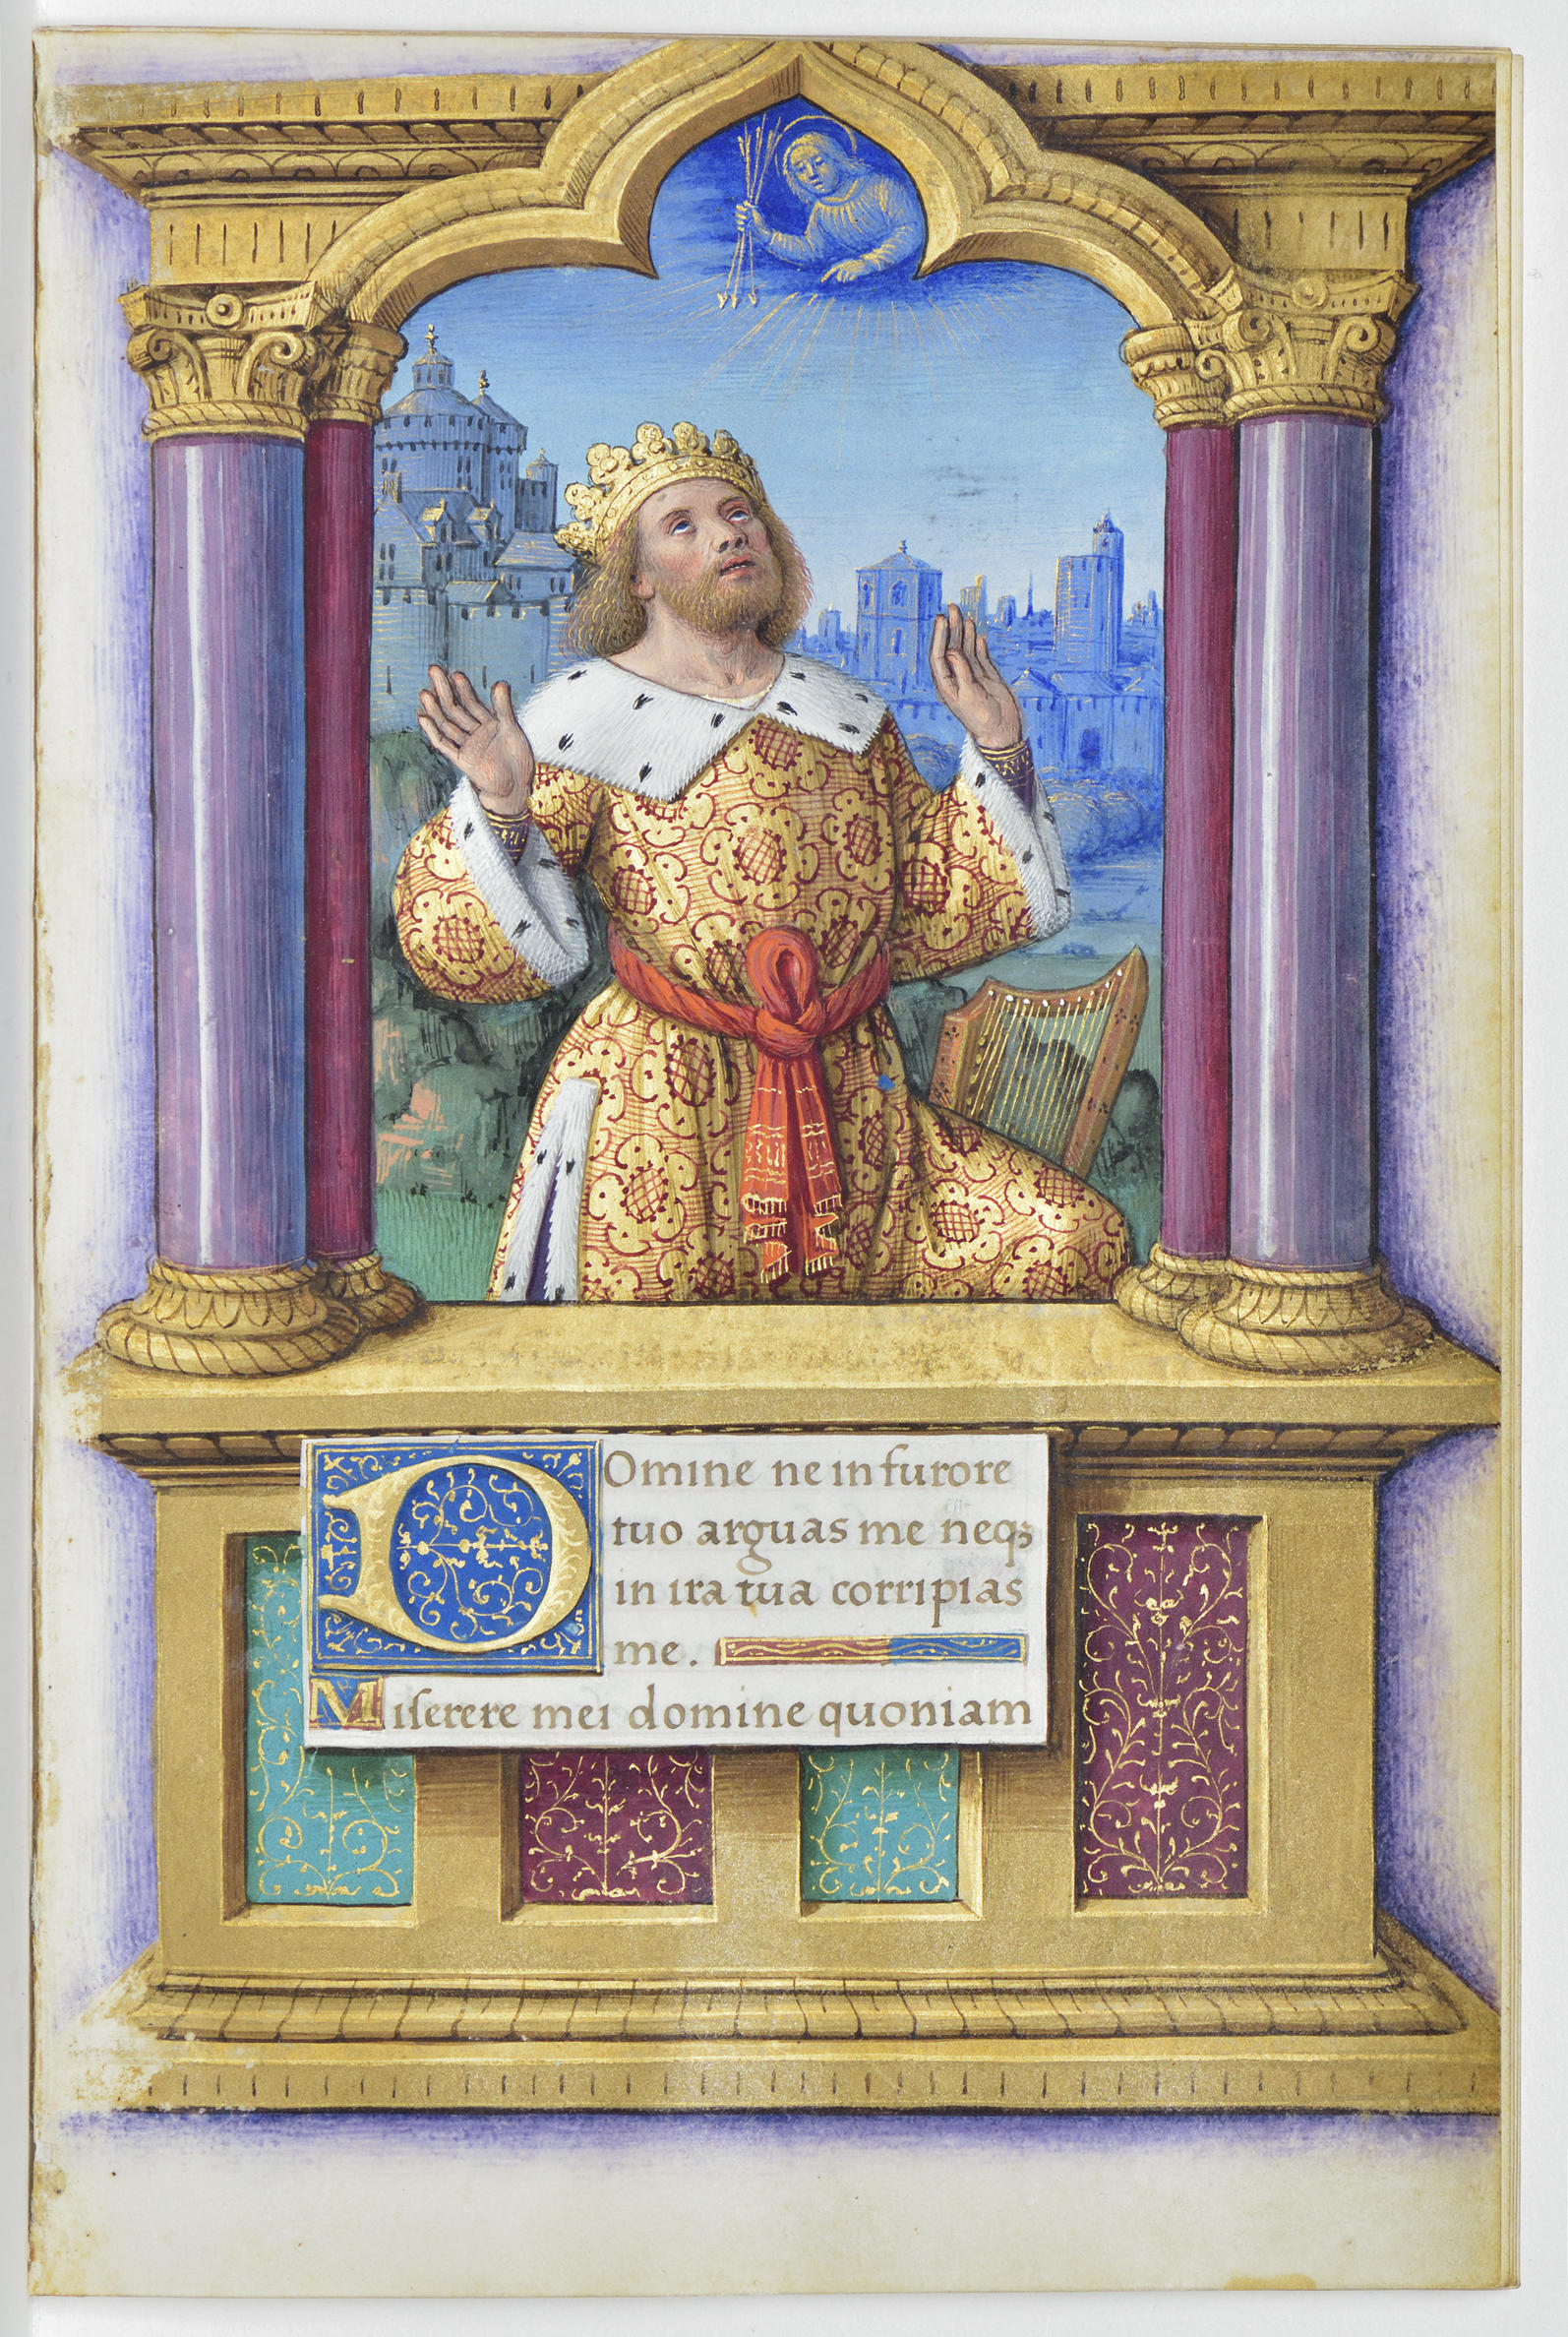 Jean Bourdichon (French, 1490-1515, illuminator), Book of Hours: King David Penitent, 1490-1515.